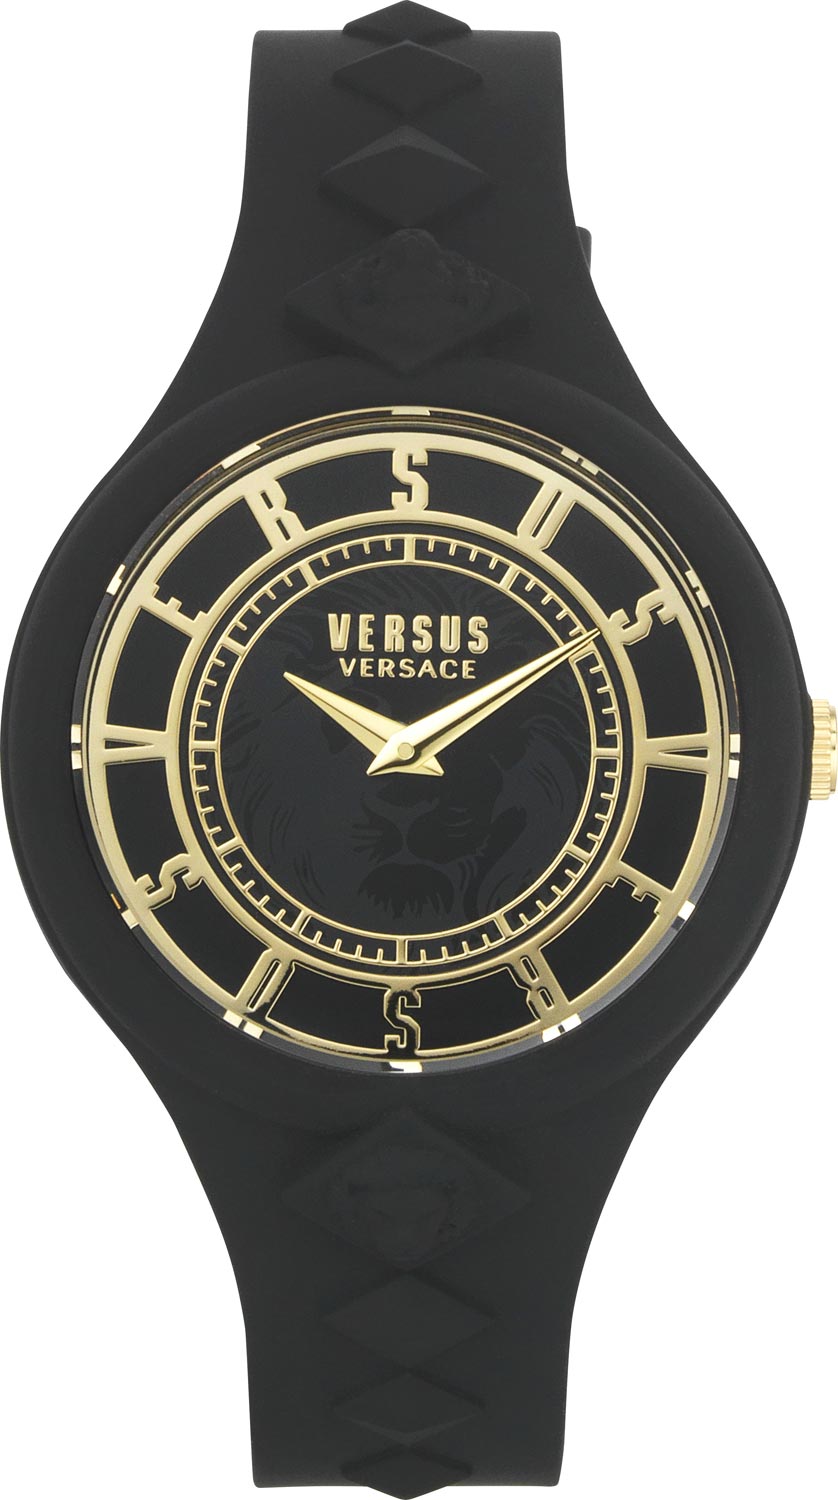   VERSUS Versace VSP1R1020